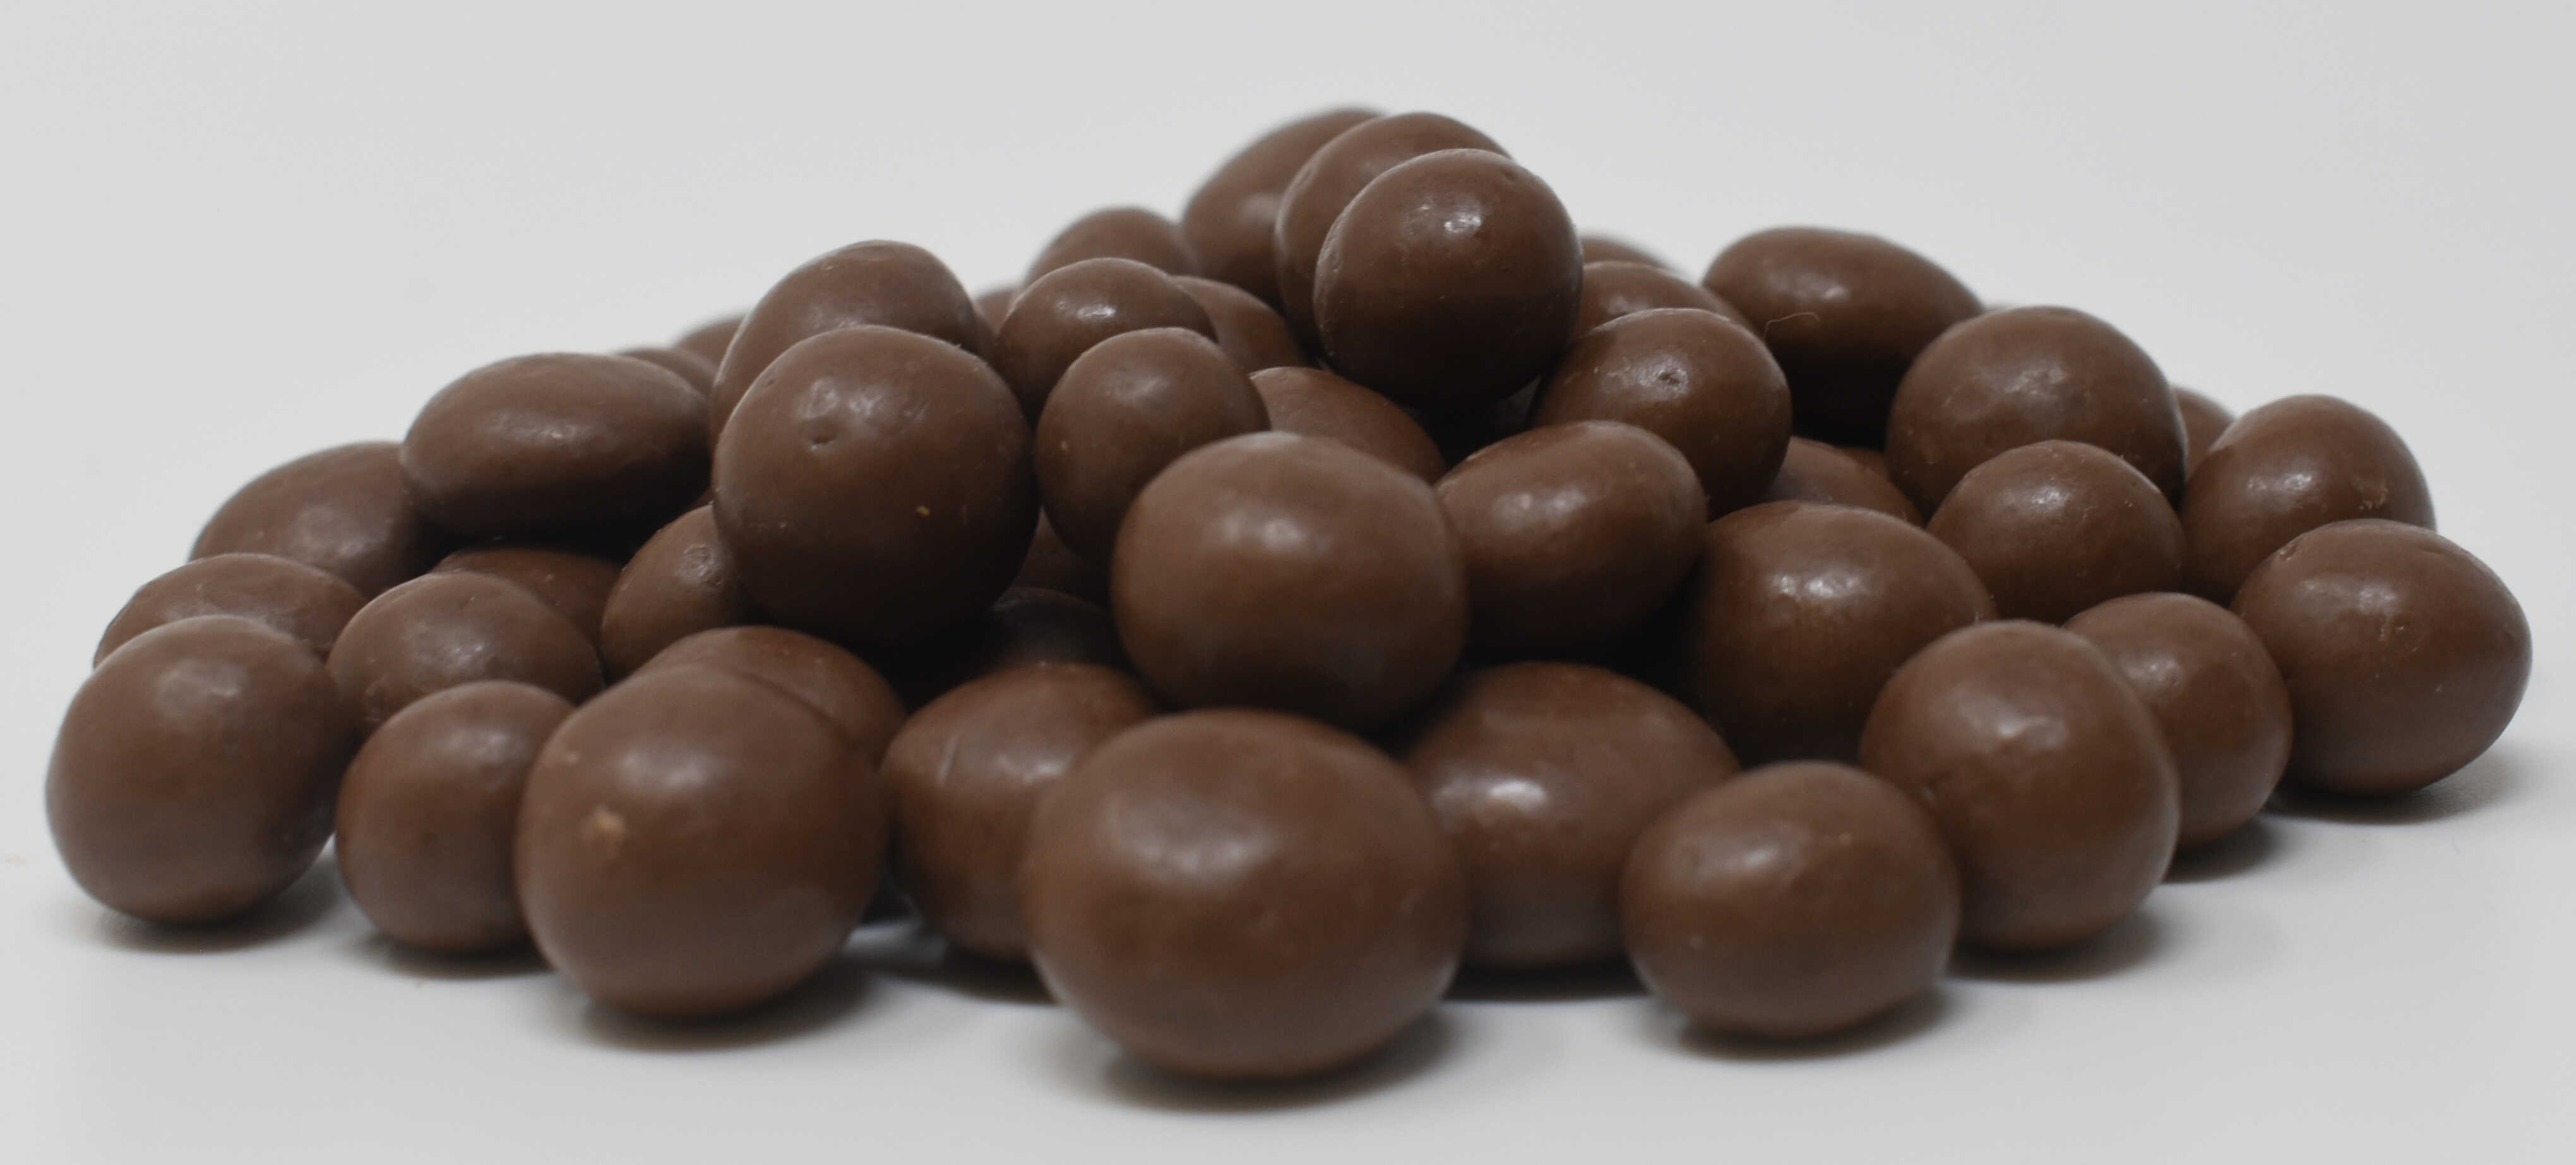 Chocolate Raisins - Side Photo